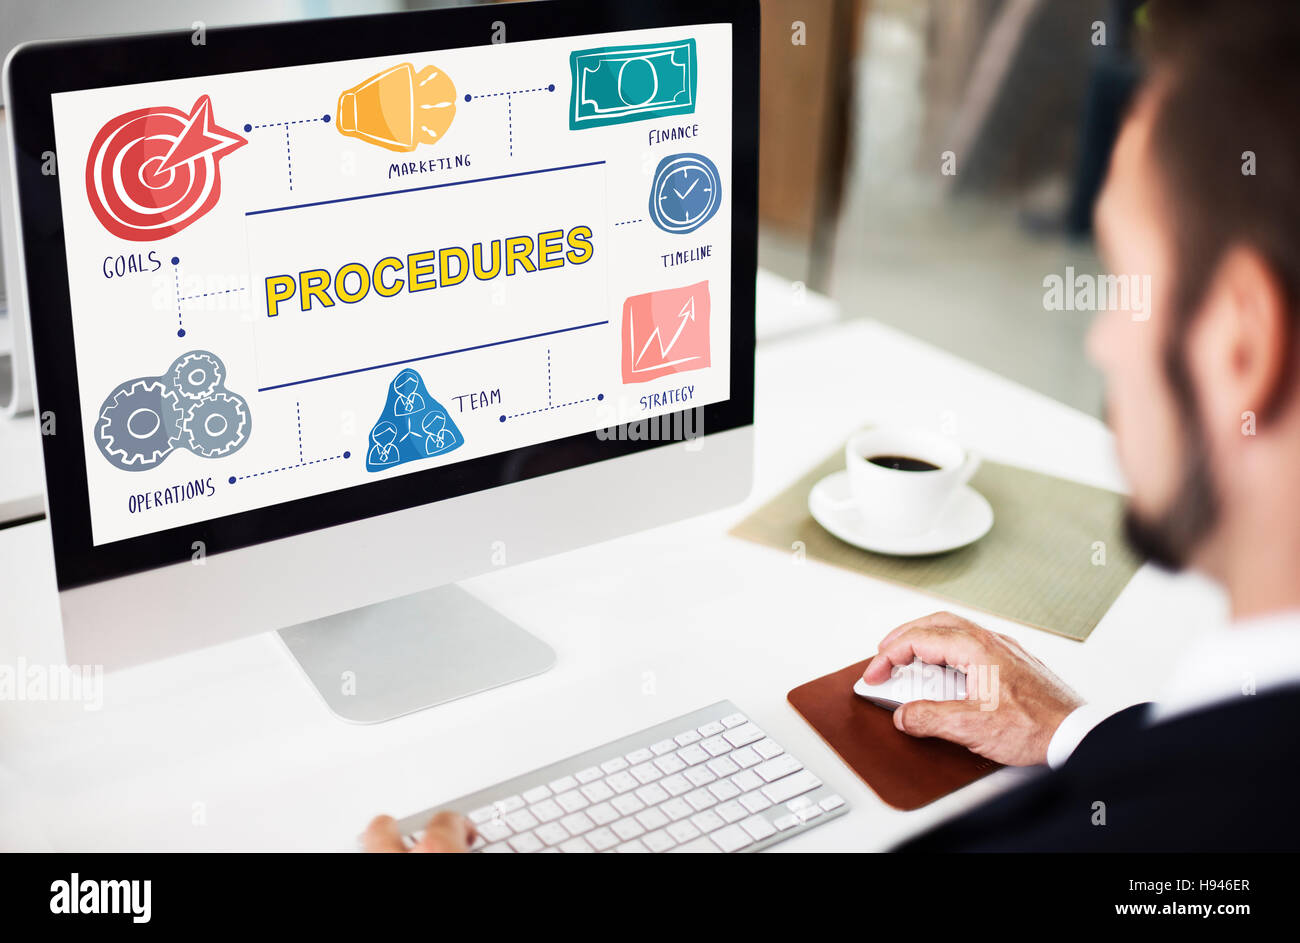 Procedures Action Business Organization Process Concept Stock Photo